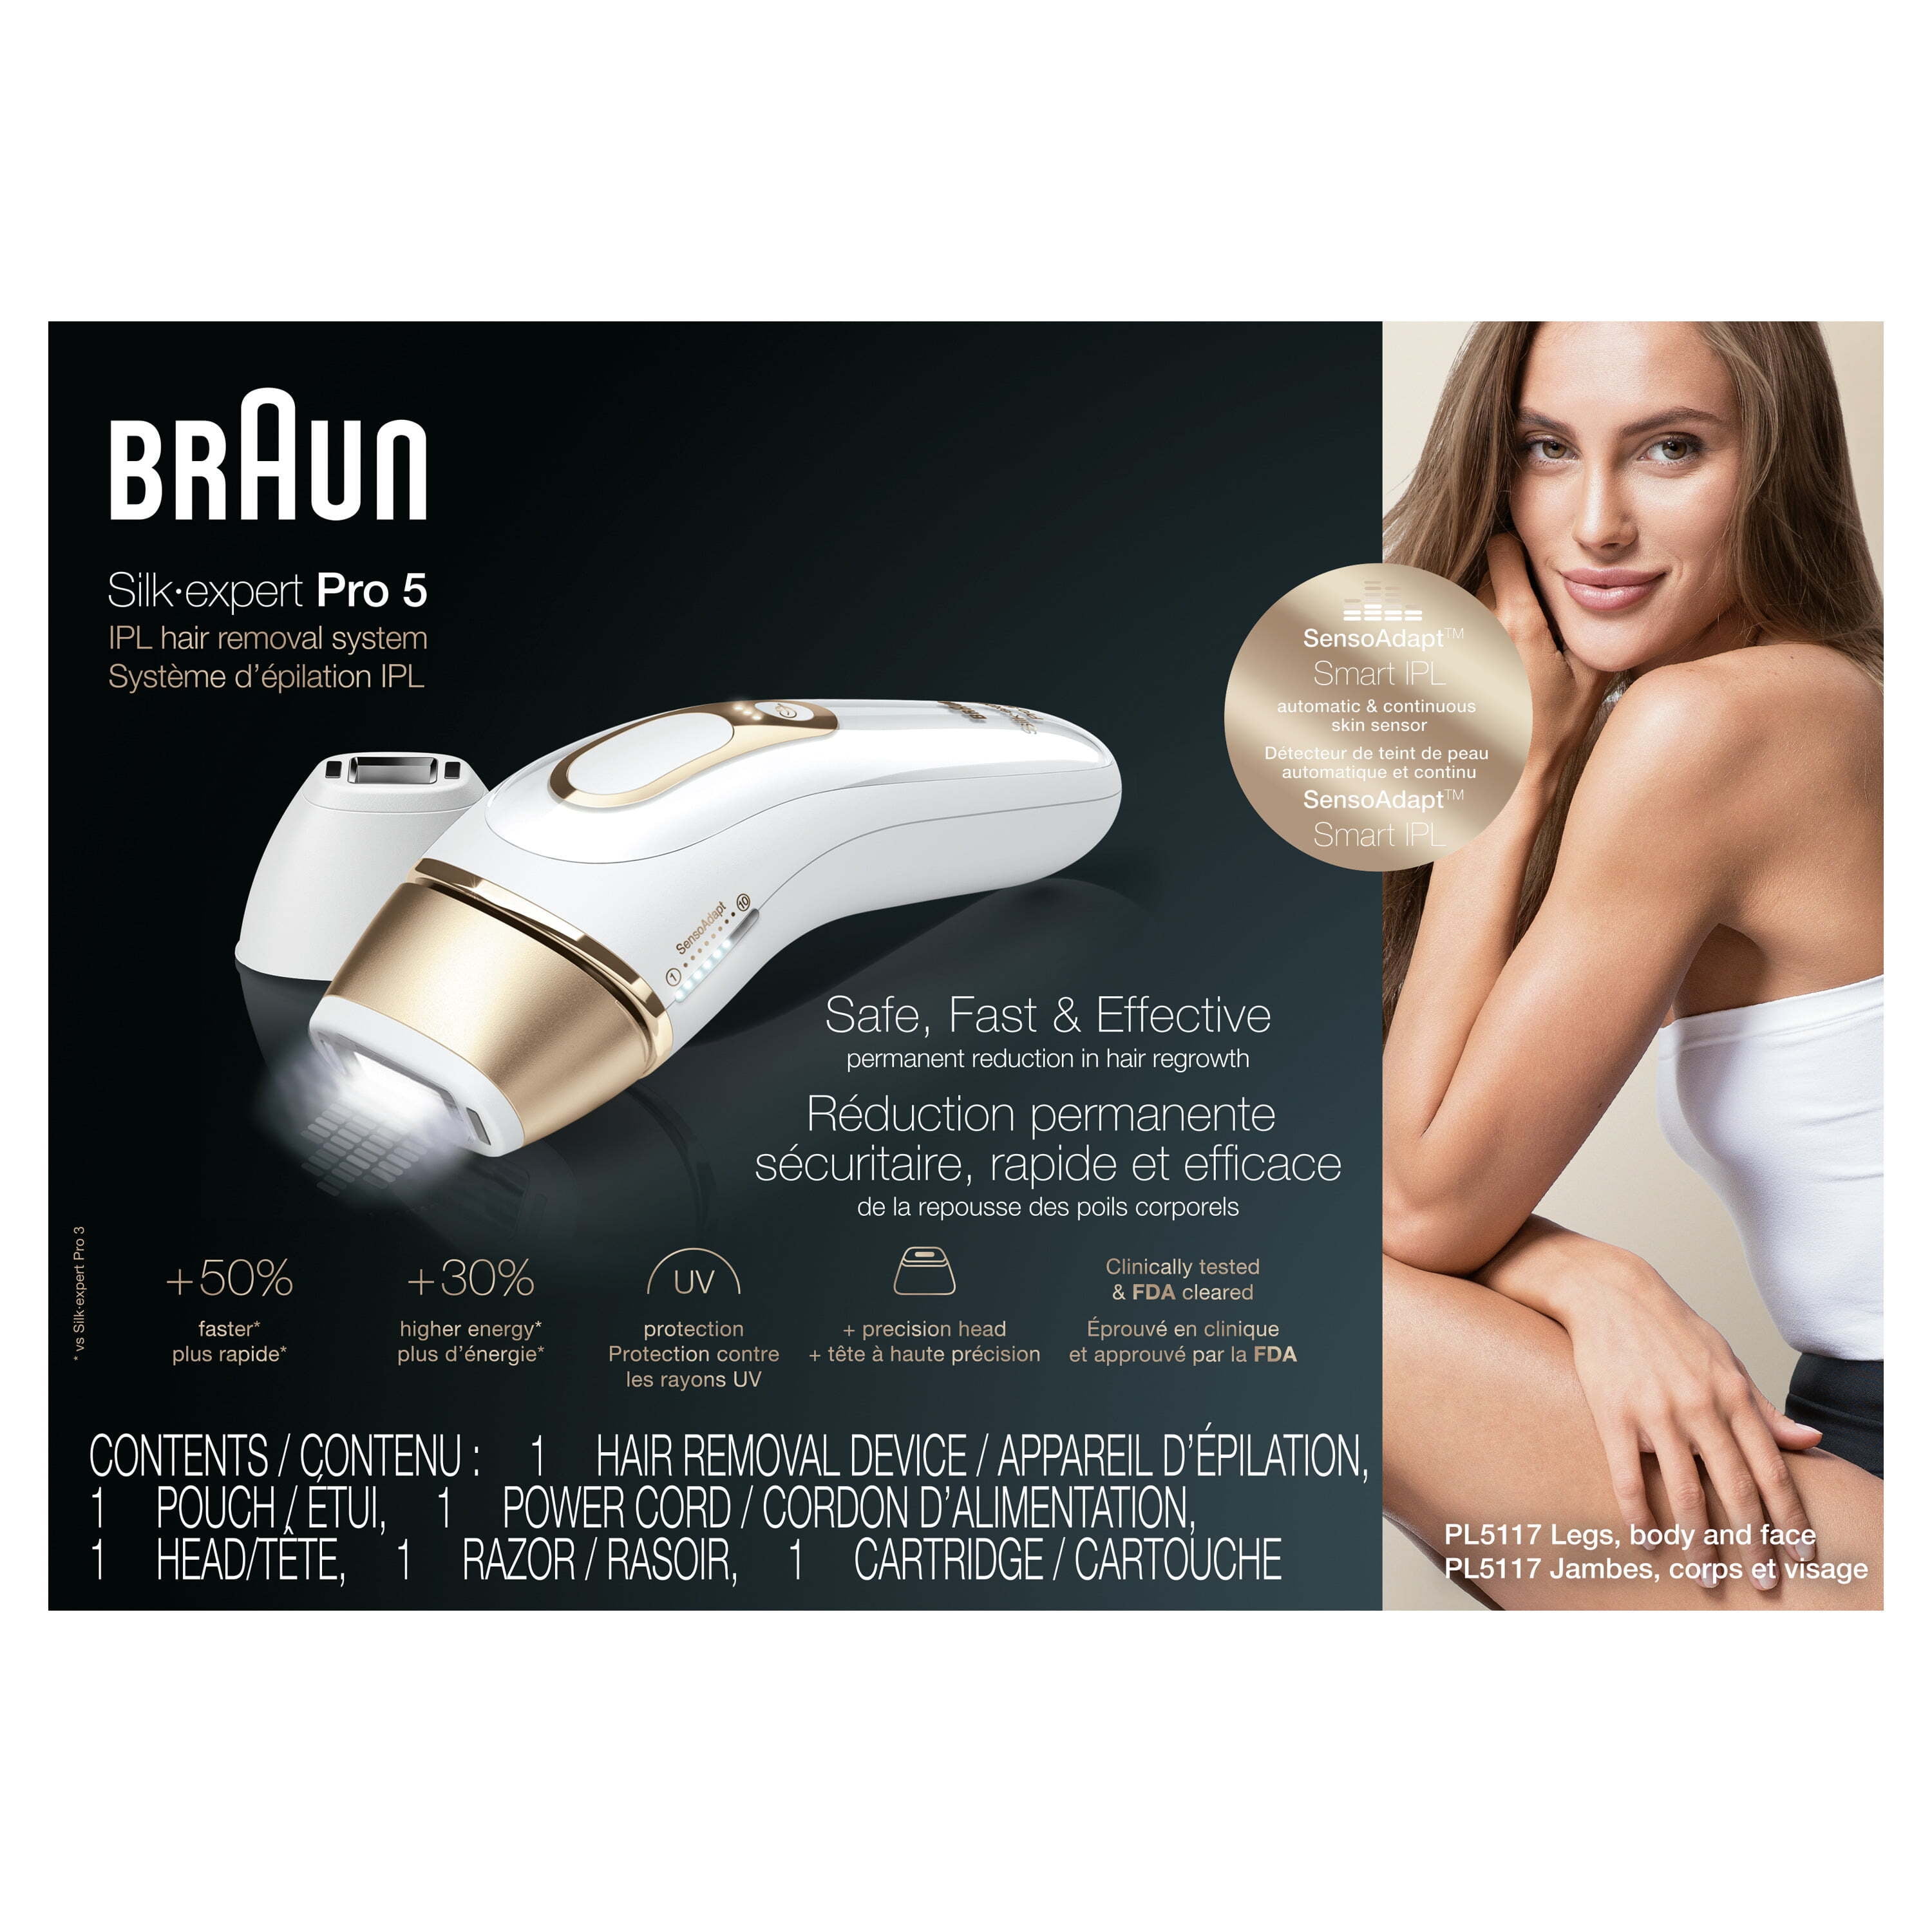 Braun Silk·expert Pro 5 PL5117 Latest Generation IPL, Permanent Hair Removal